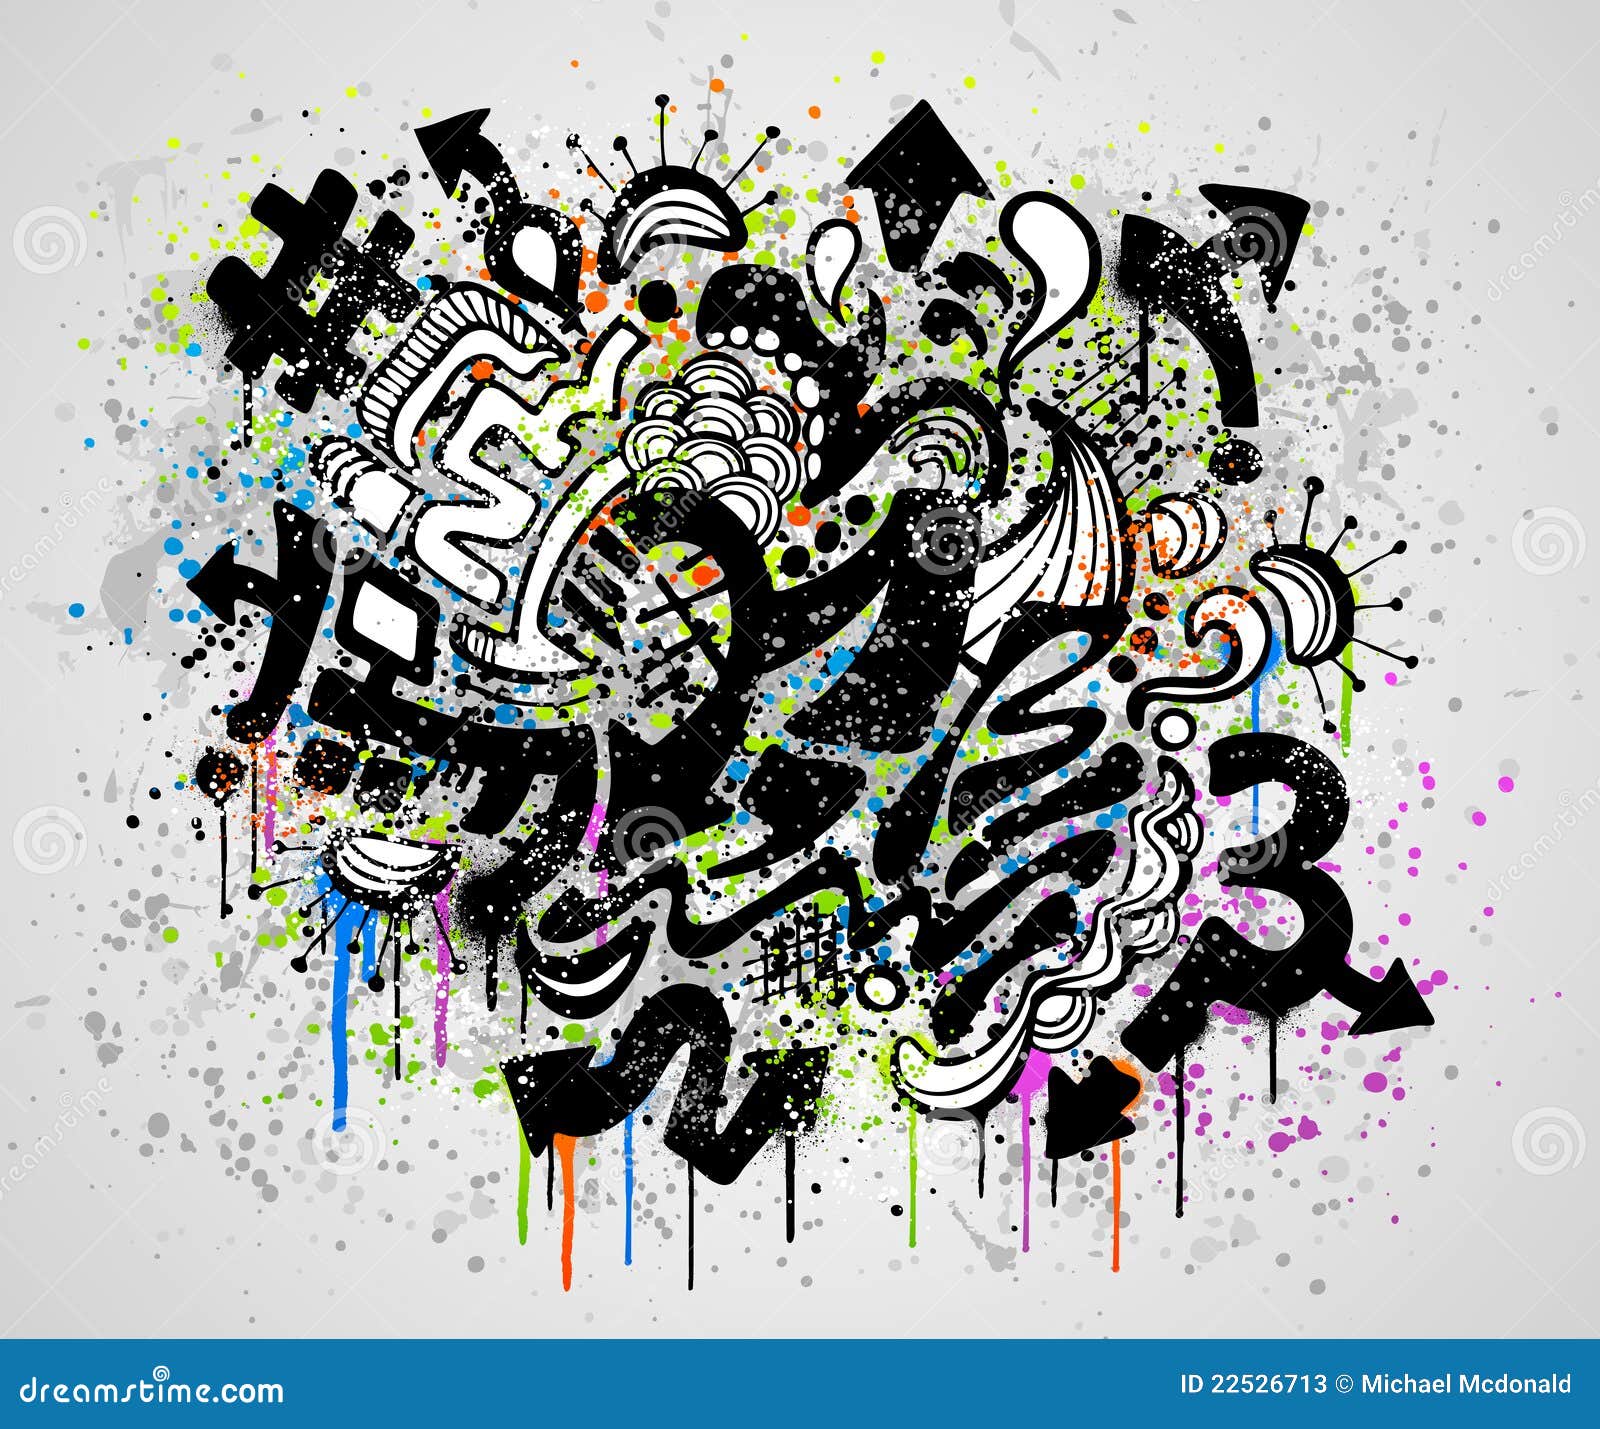 Graffiti Grunge Design Stock Vector Illustration Of Abstract 22526713